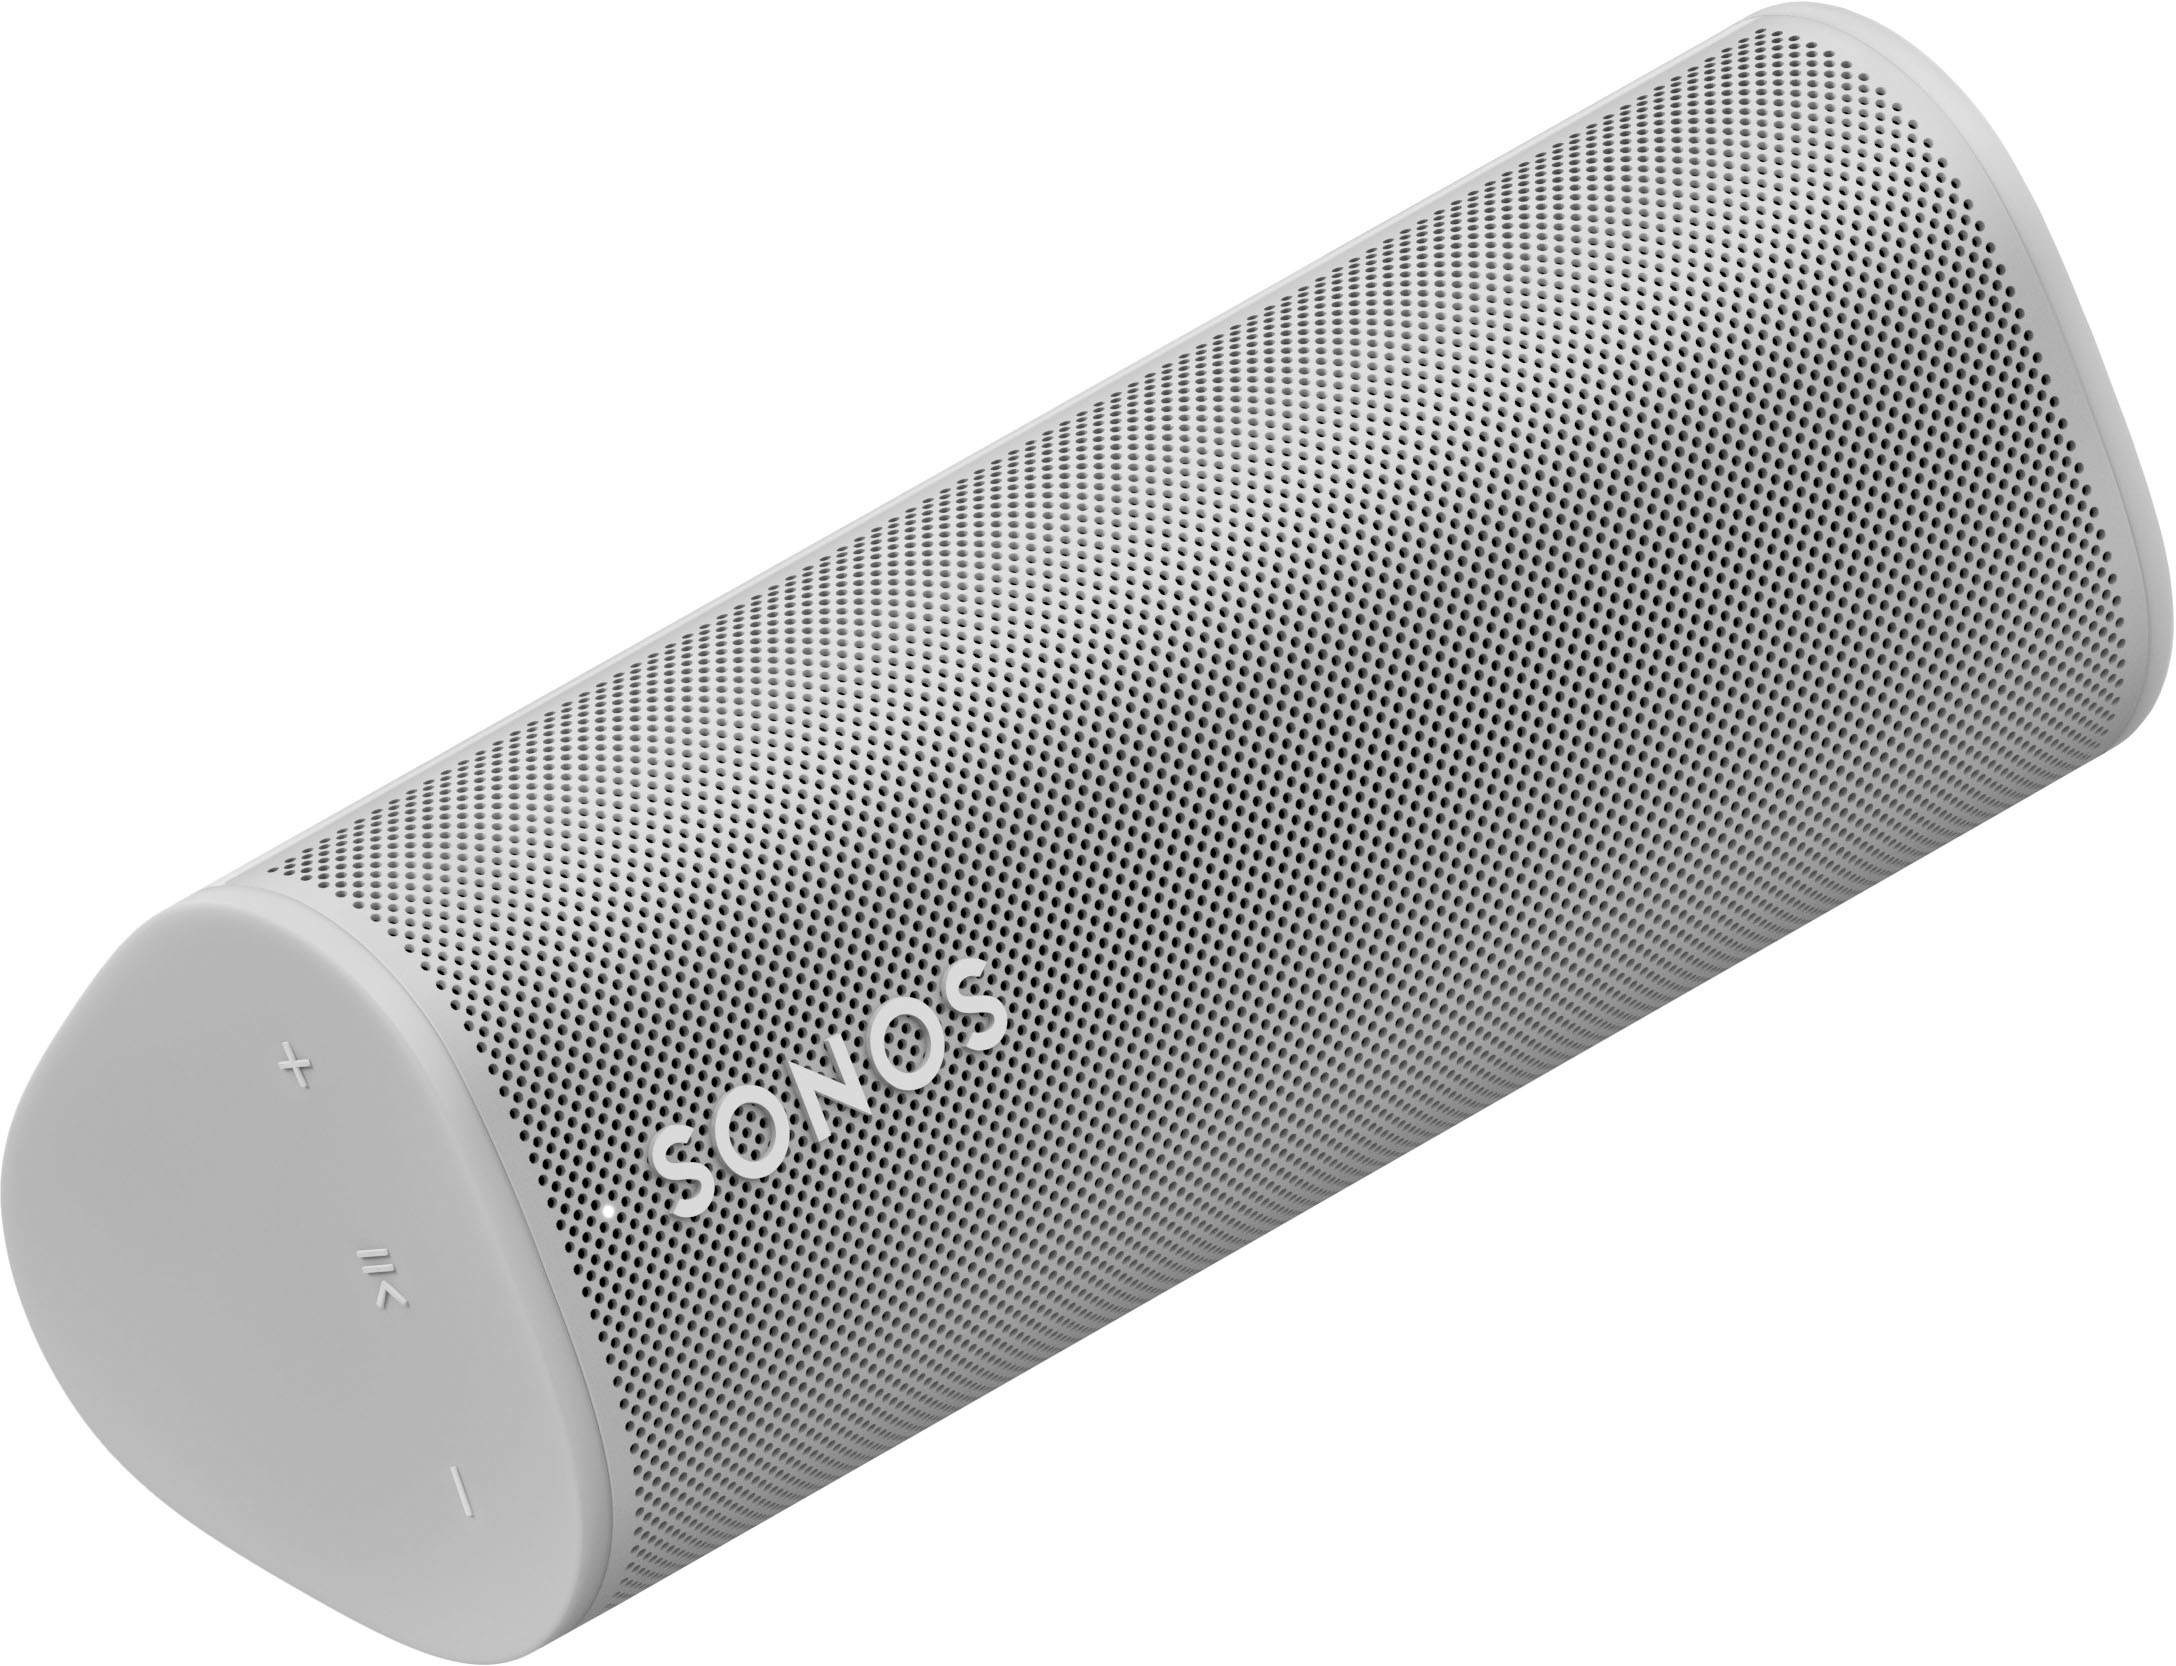 Pair Sonos Roam with Bluetooth